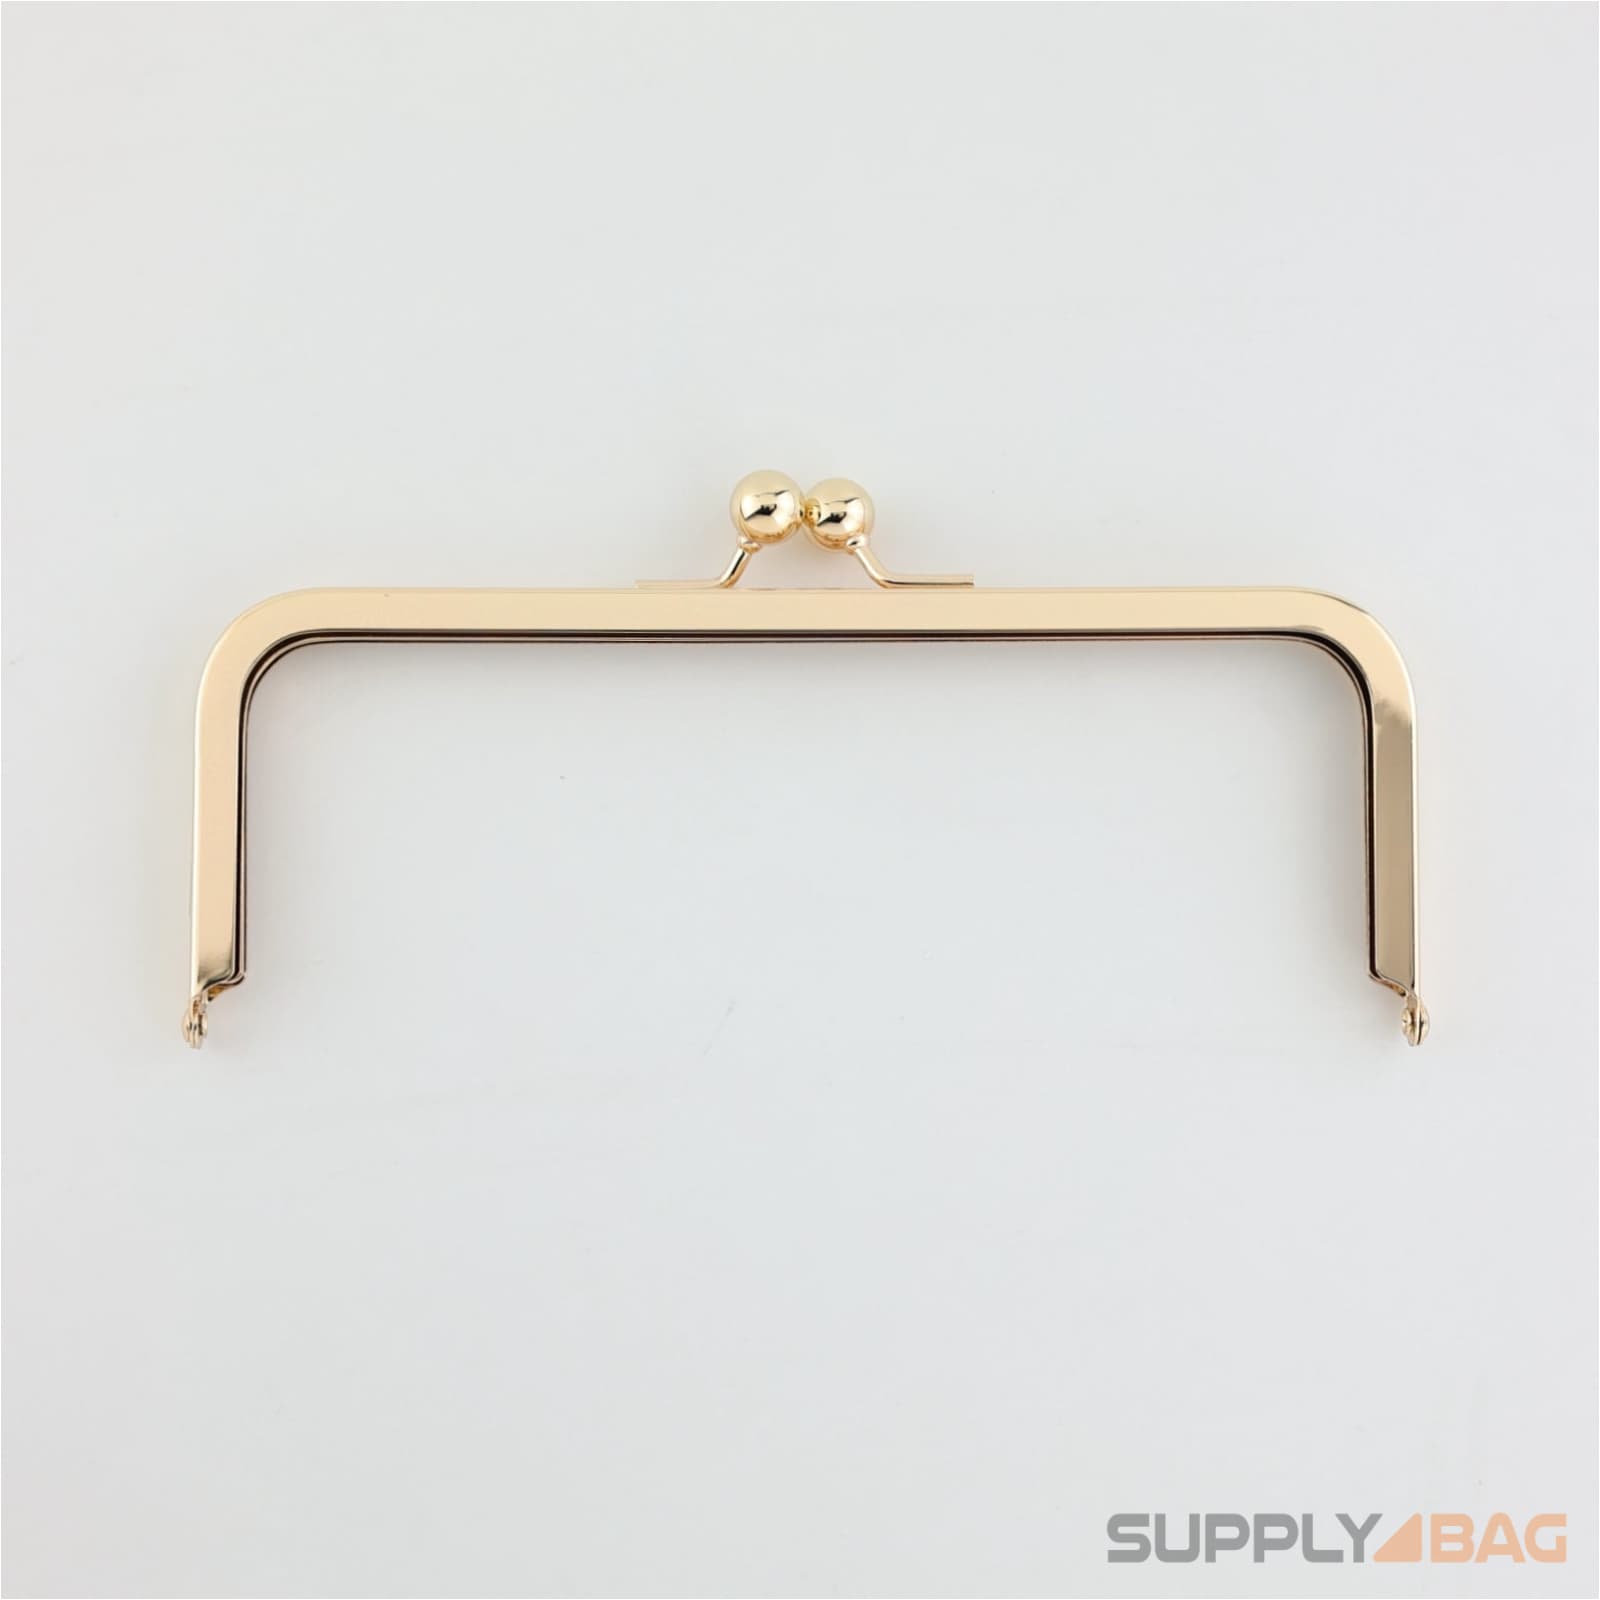 8 x 3 inch - kisslock ball clasp - gold metal purse frame